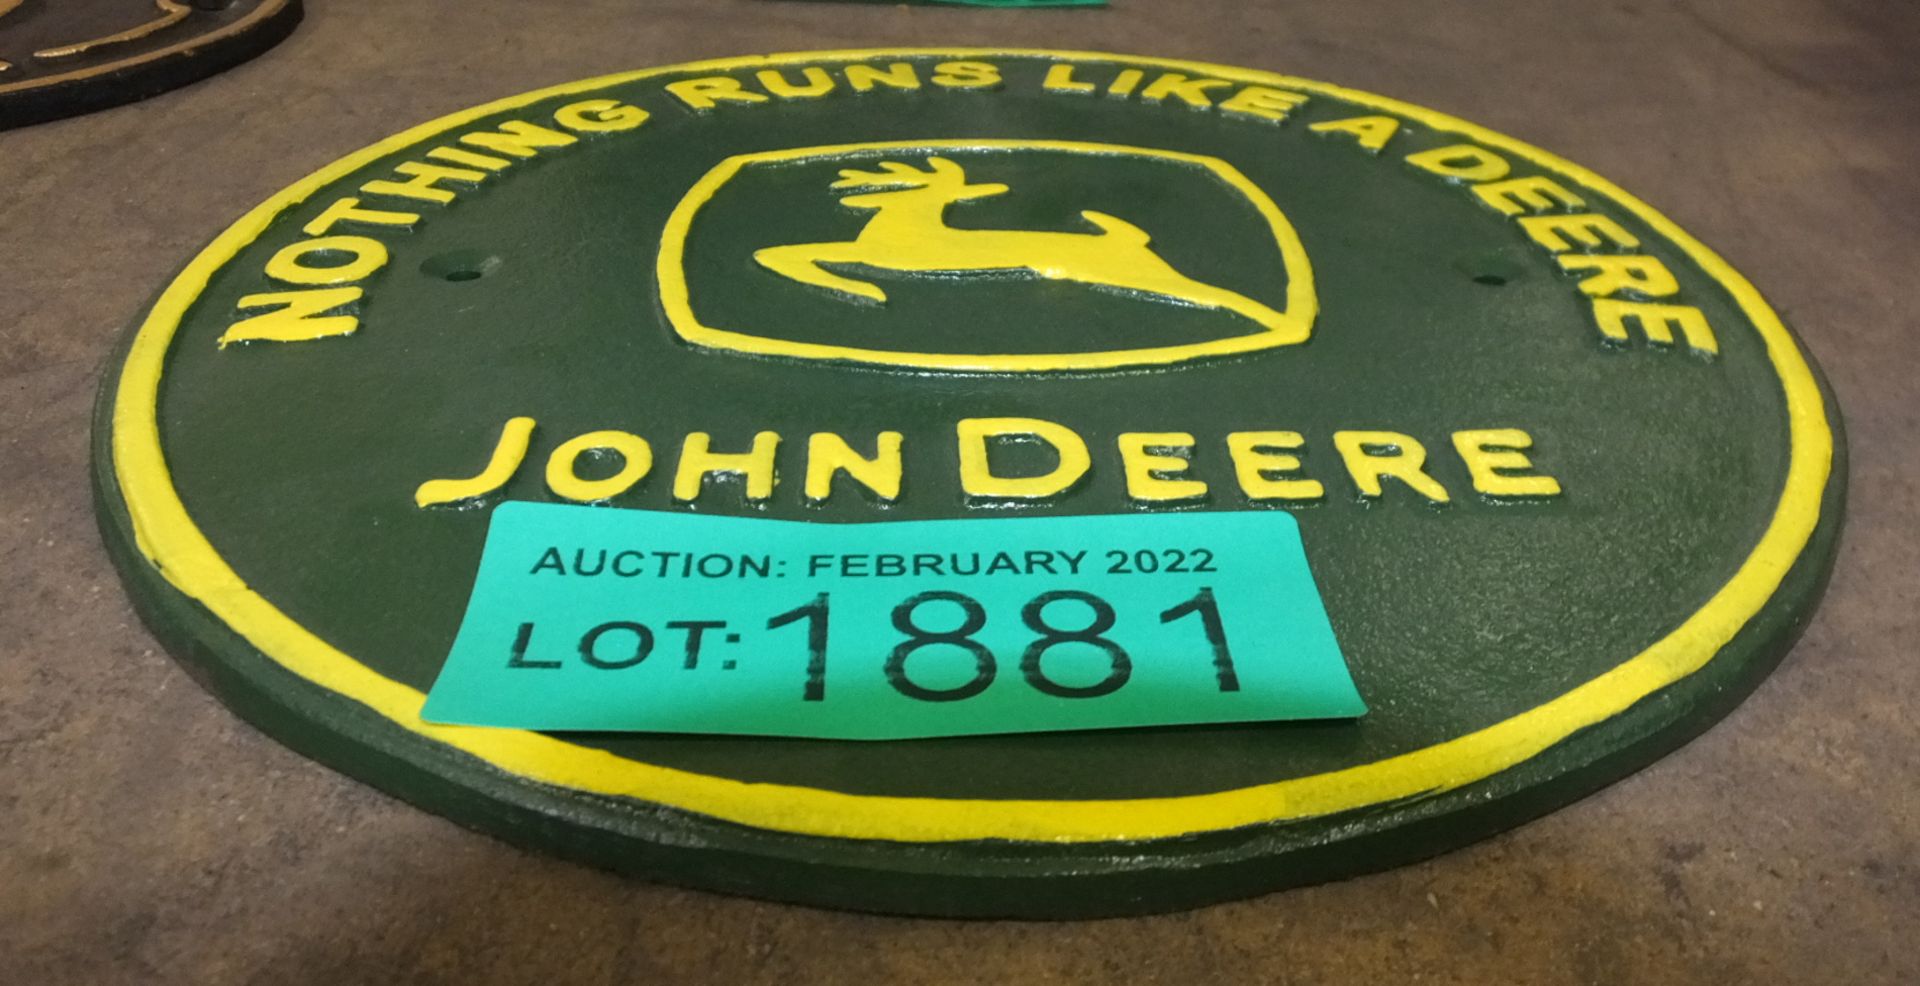 John Deere Cast Sign - Image 2 of 2